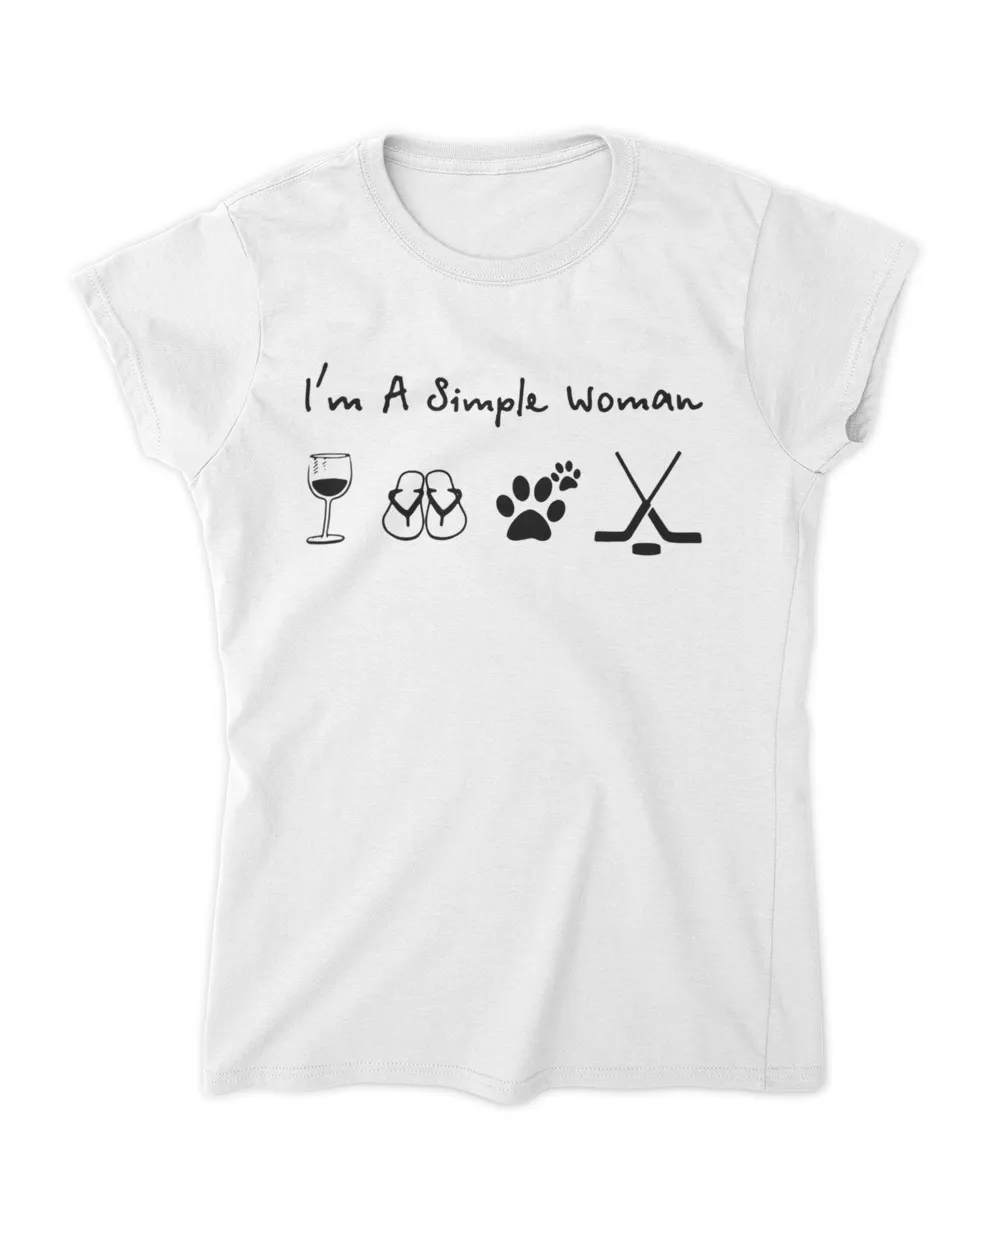 I'm A Simple Woman Love Wine Dog Cat Hockey HOC250323A18